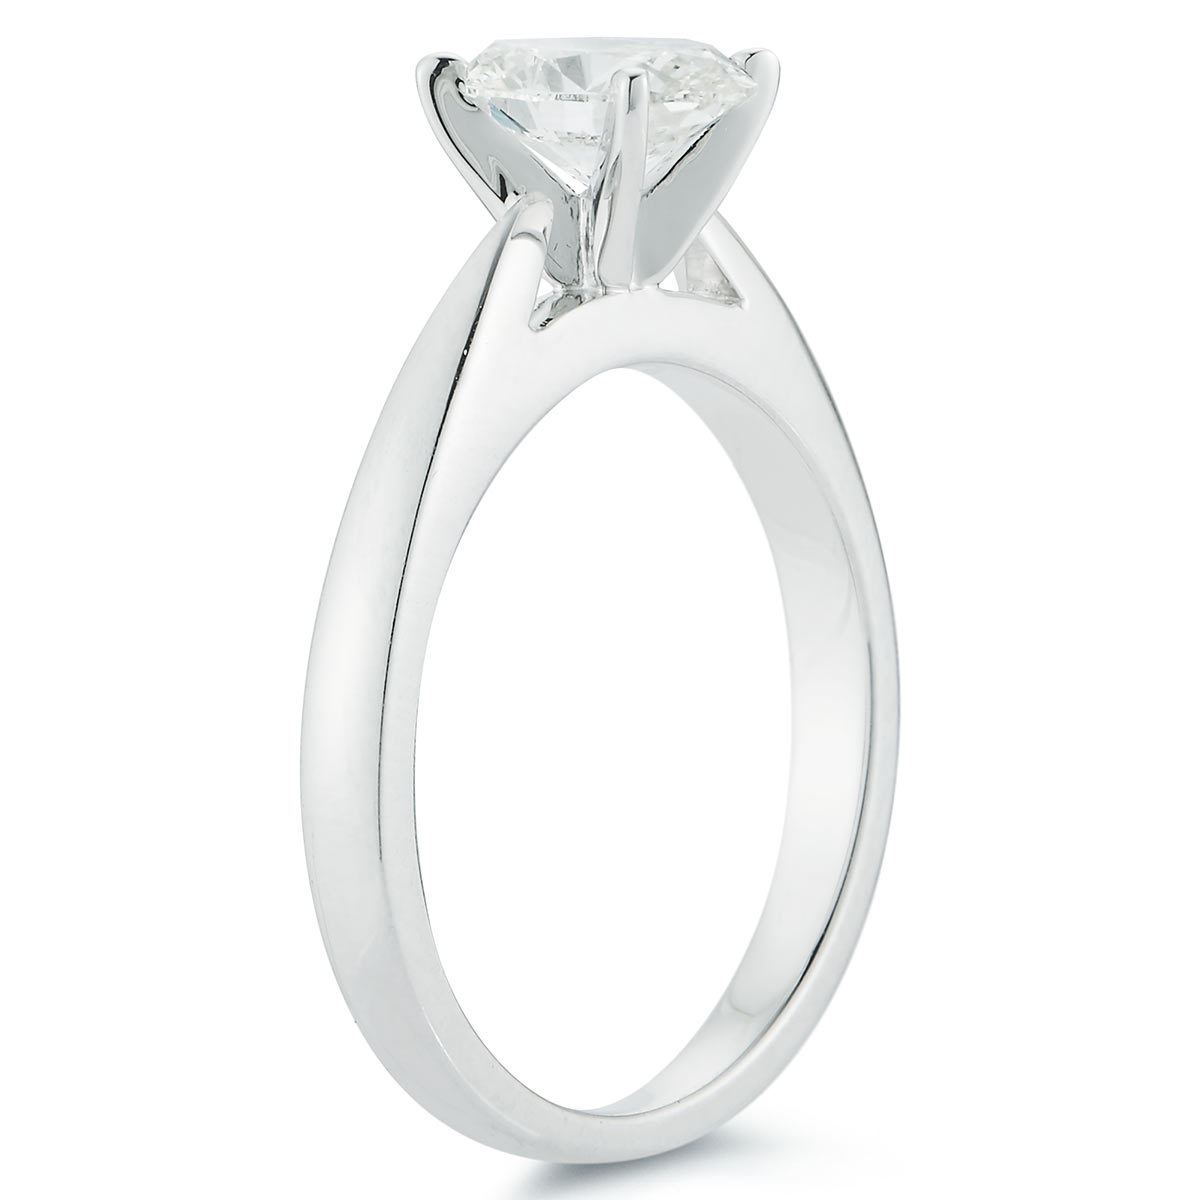 1.0ct Oval Cut Diamond Solitaire Ring, Platinum